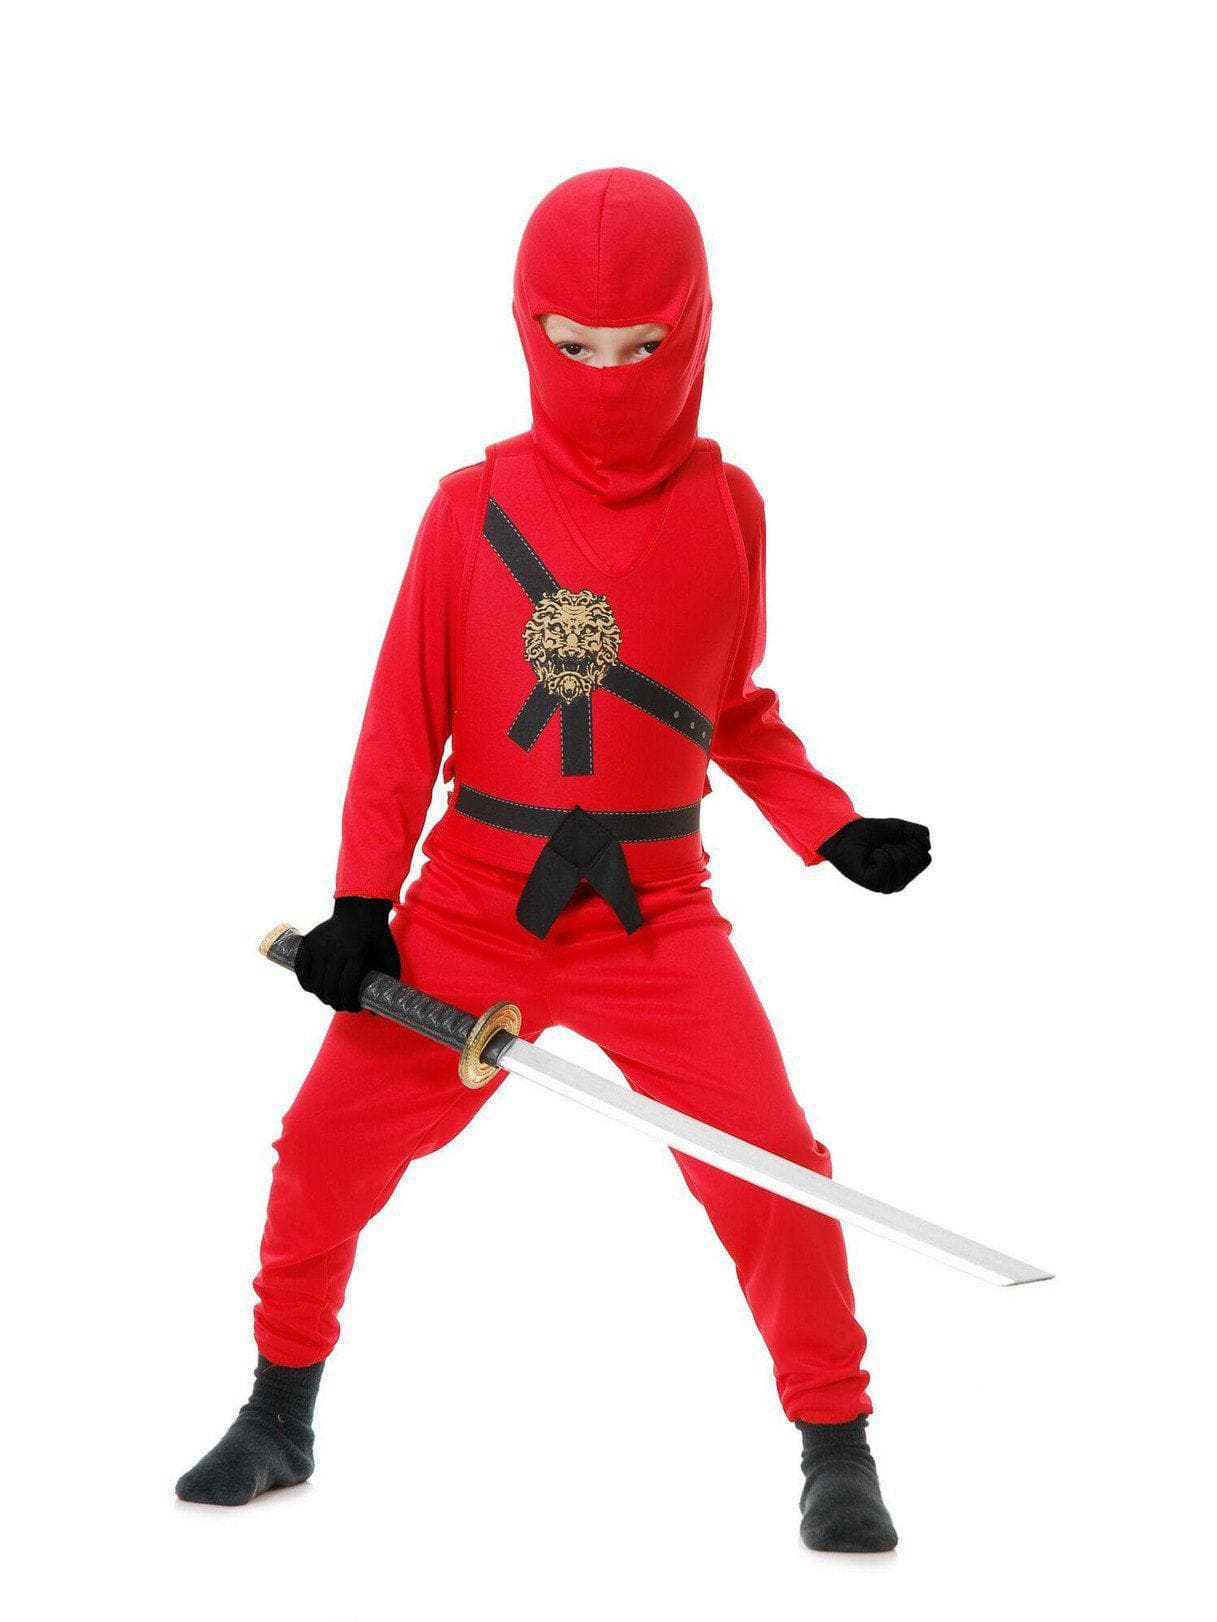 Kid's Ninja Avenger Series 1 Red Costume - costumes.com